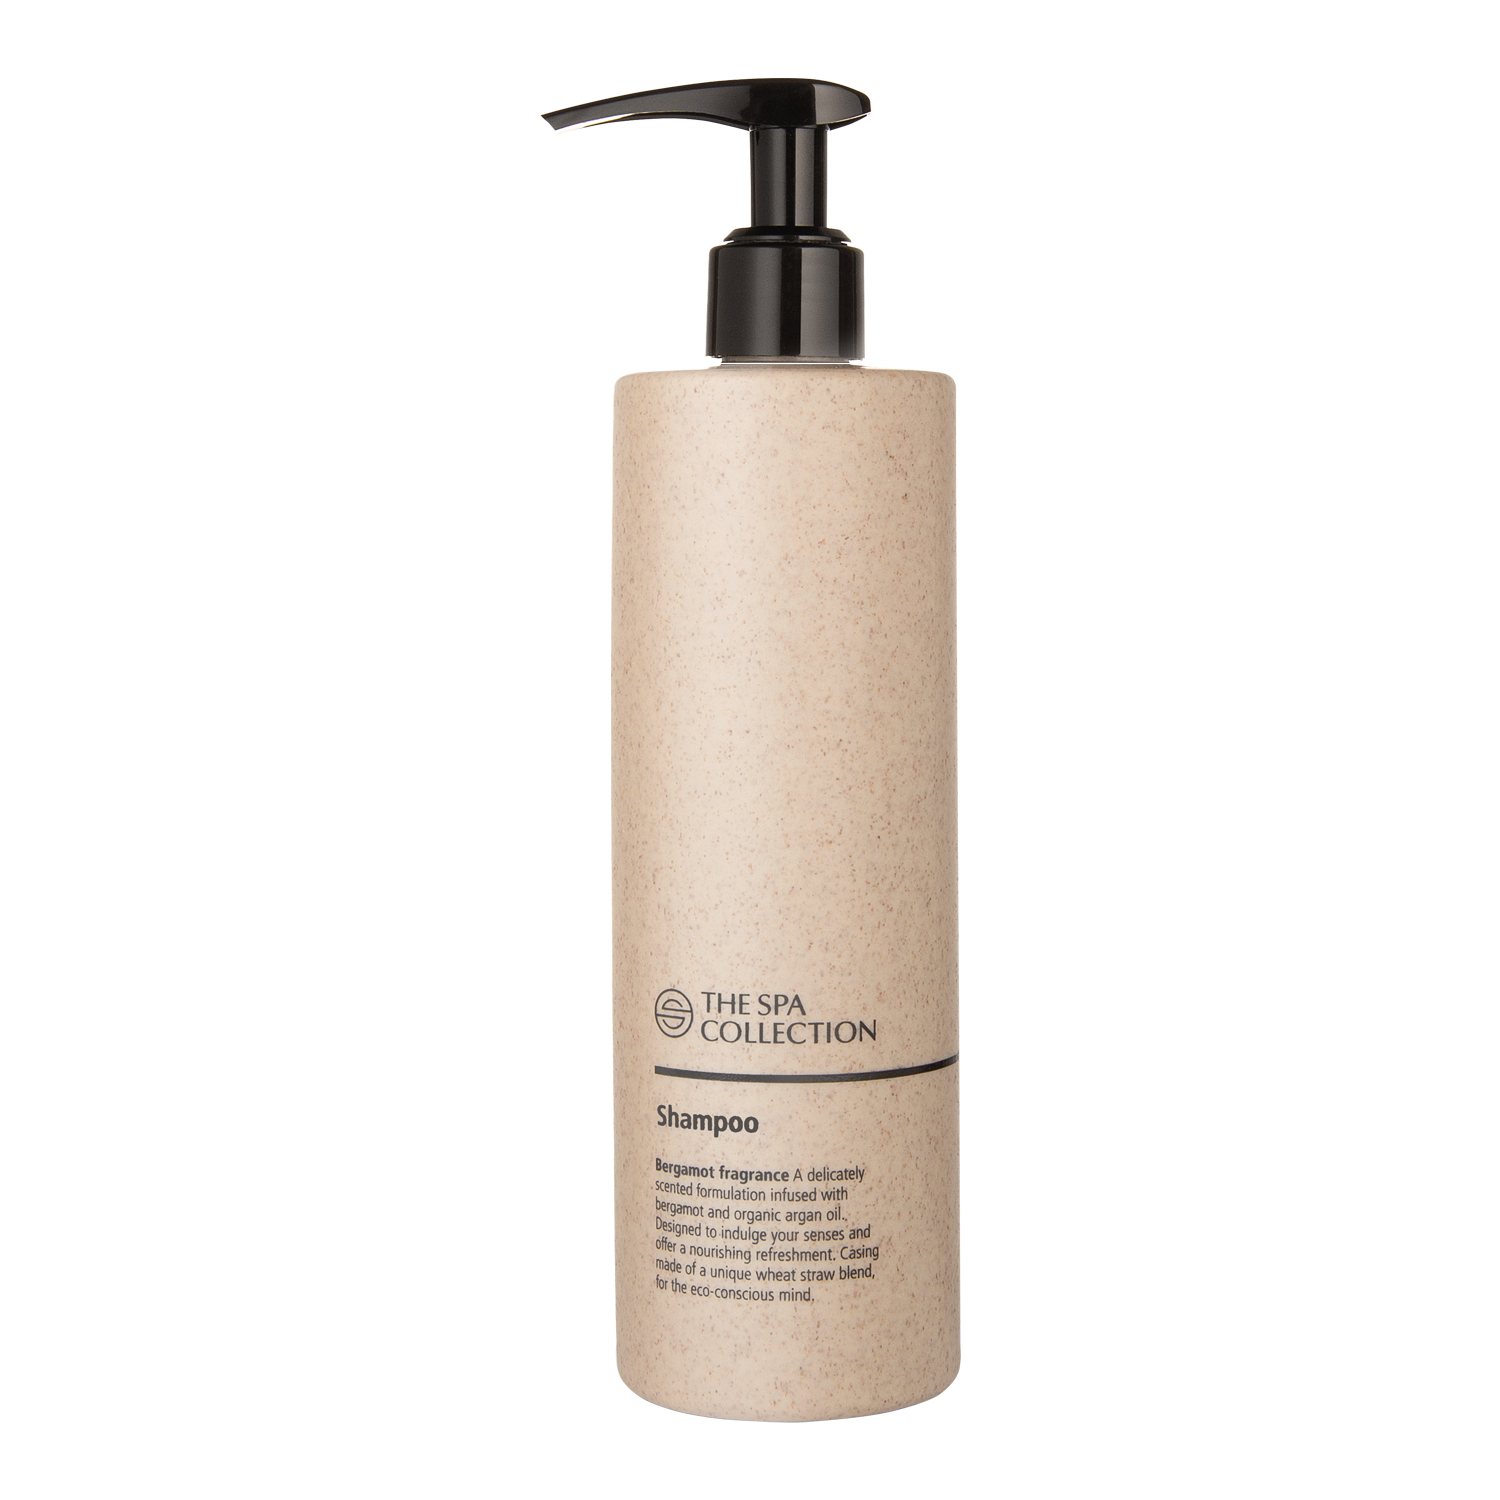 Shampoo - 400ml wheatstraw bottle - The Spa Collection Bergamot